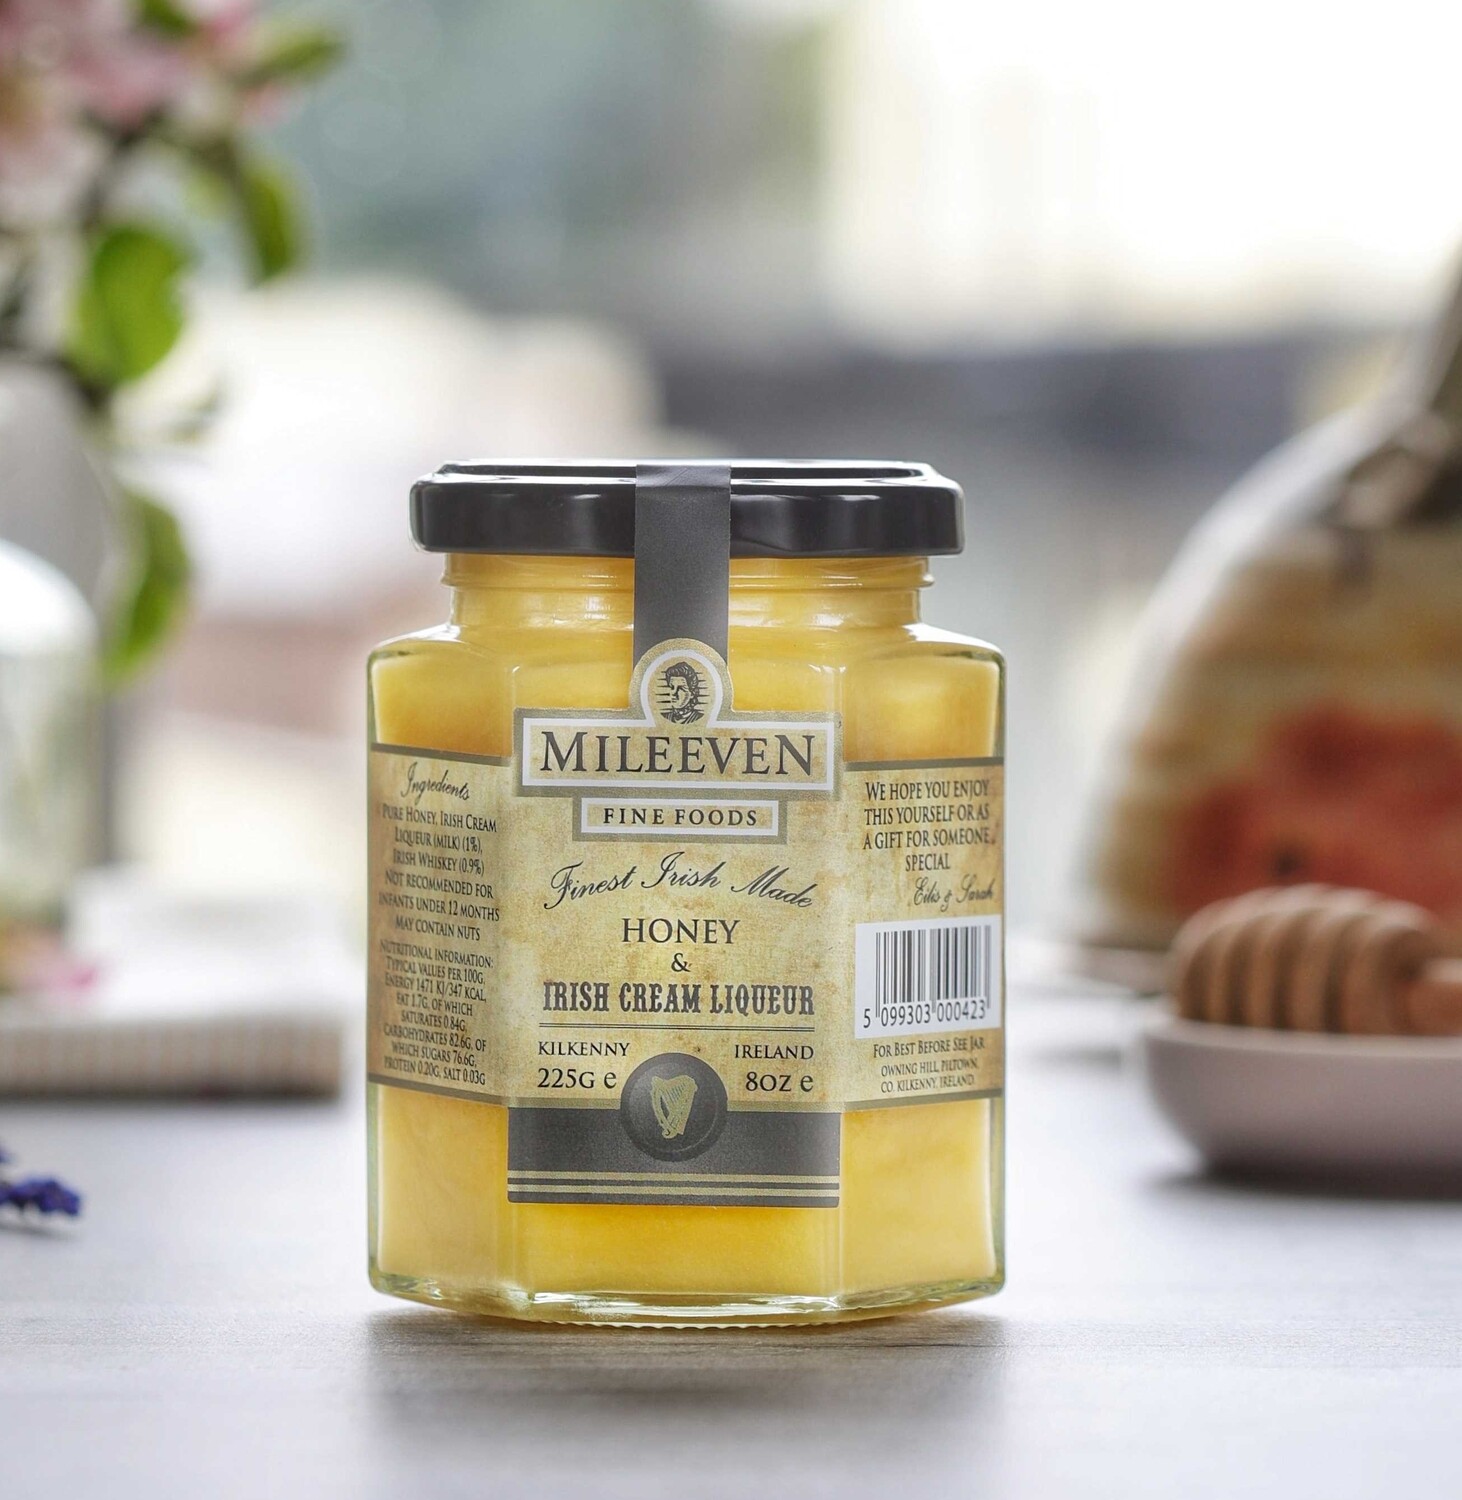 Mileeven Honey with Irish Cream Liqueur